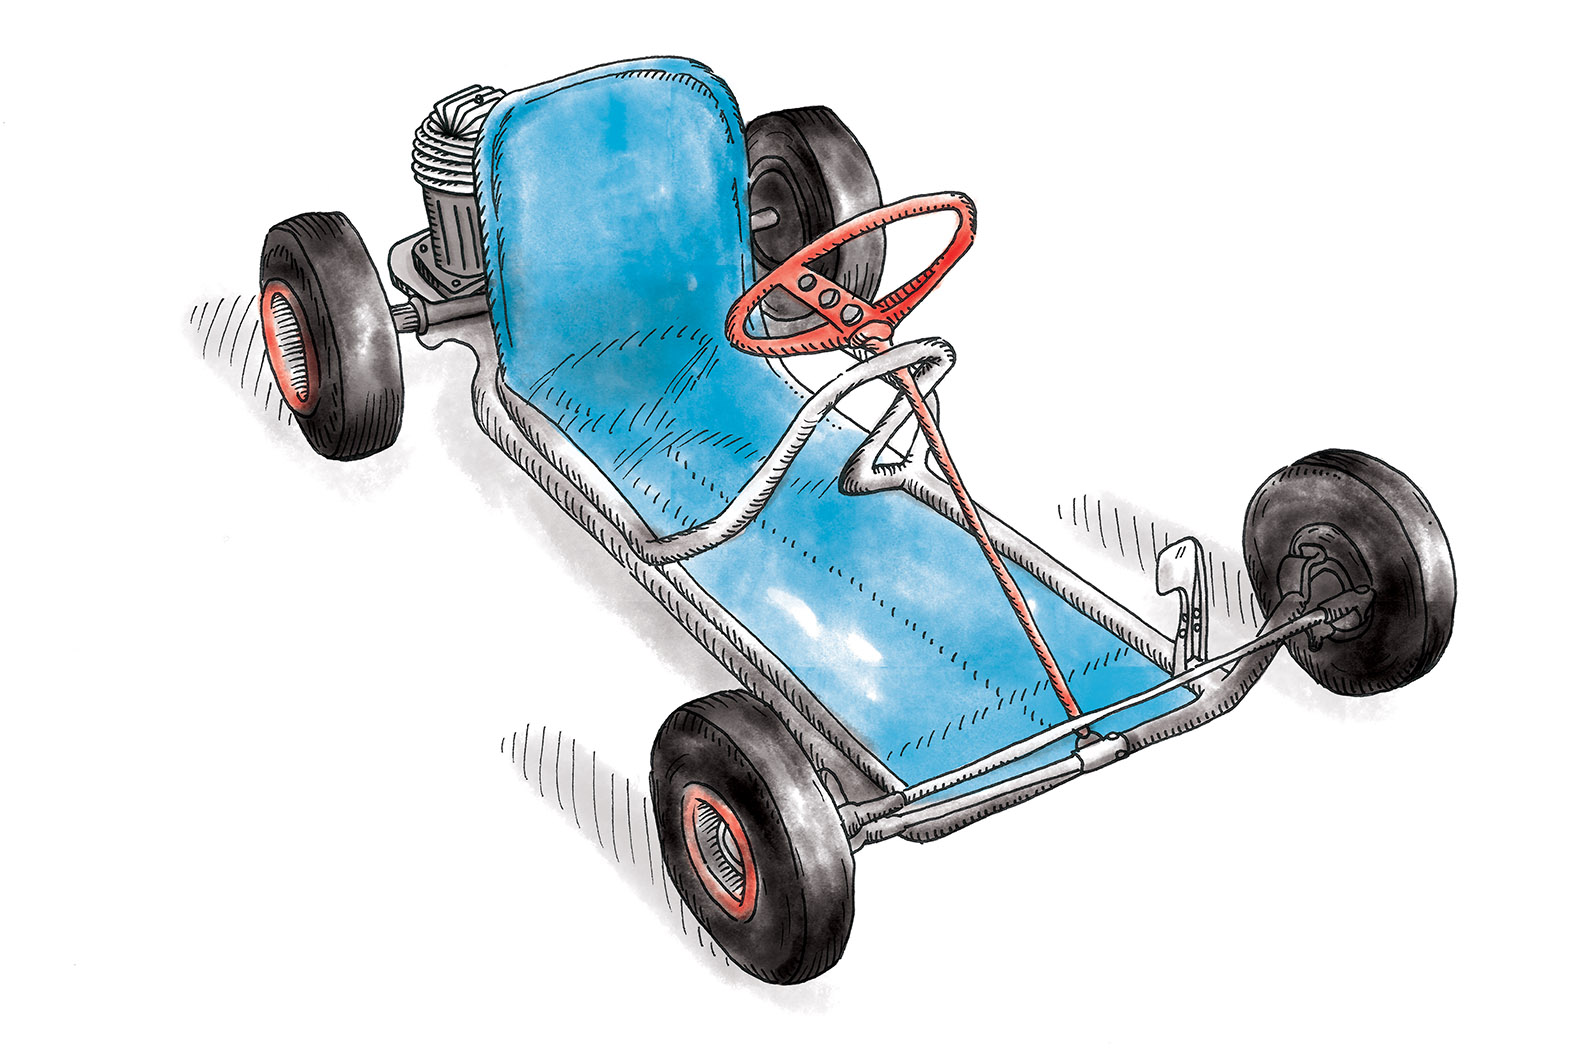 Muir - Go cart illustration